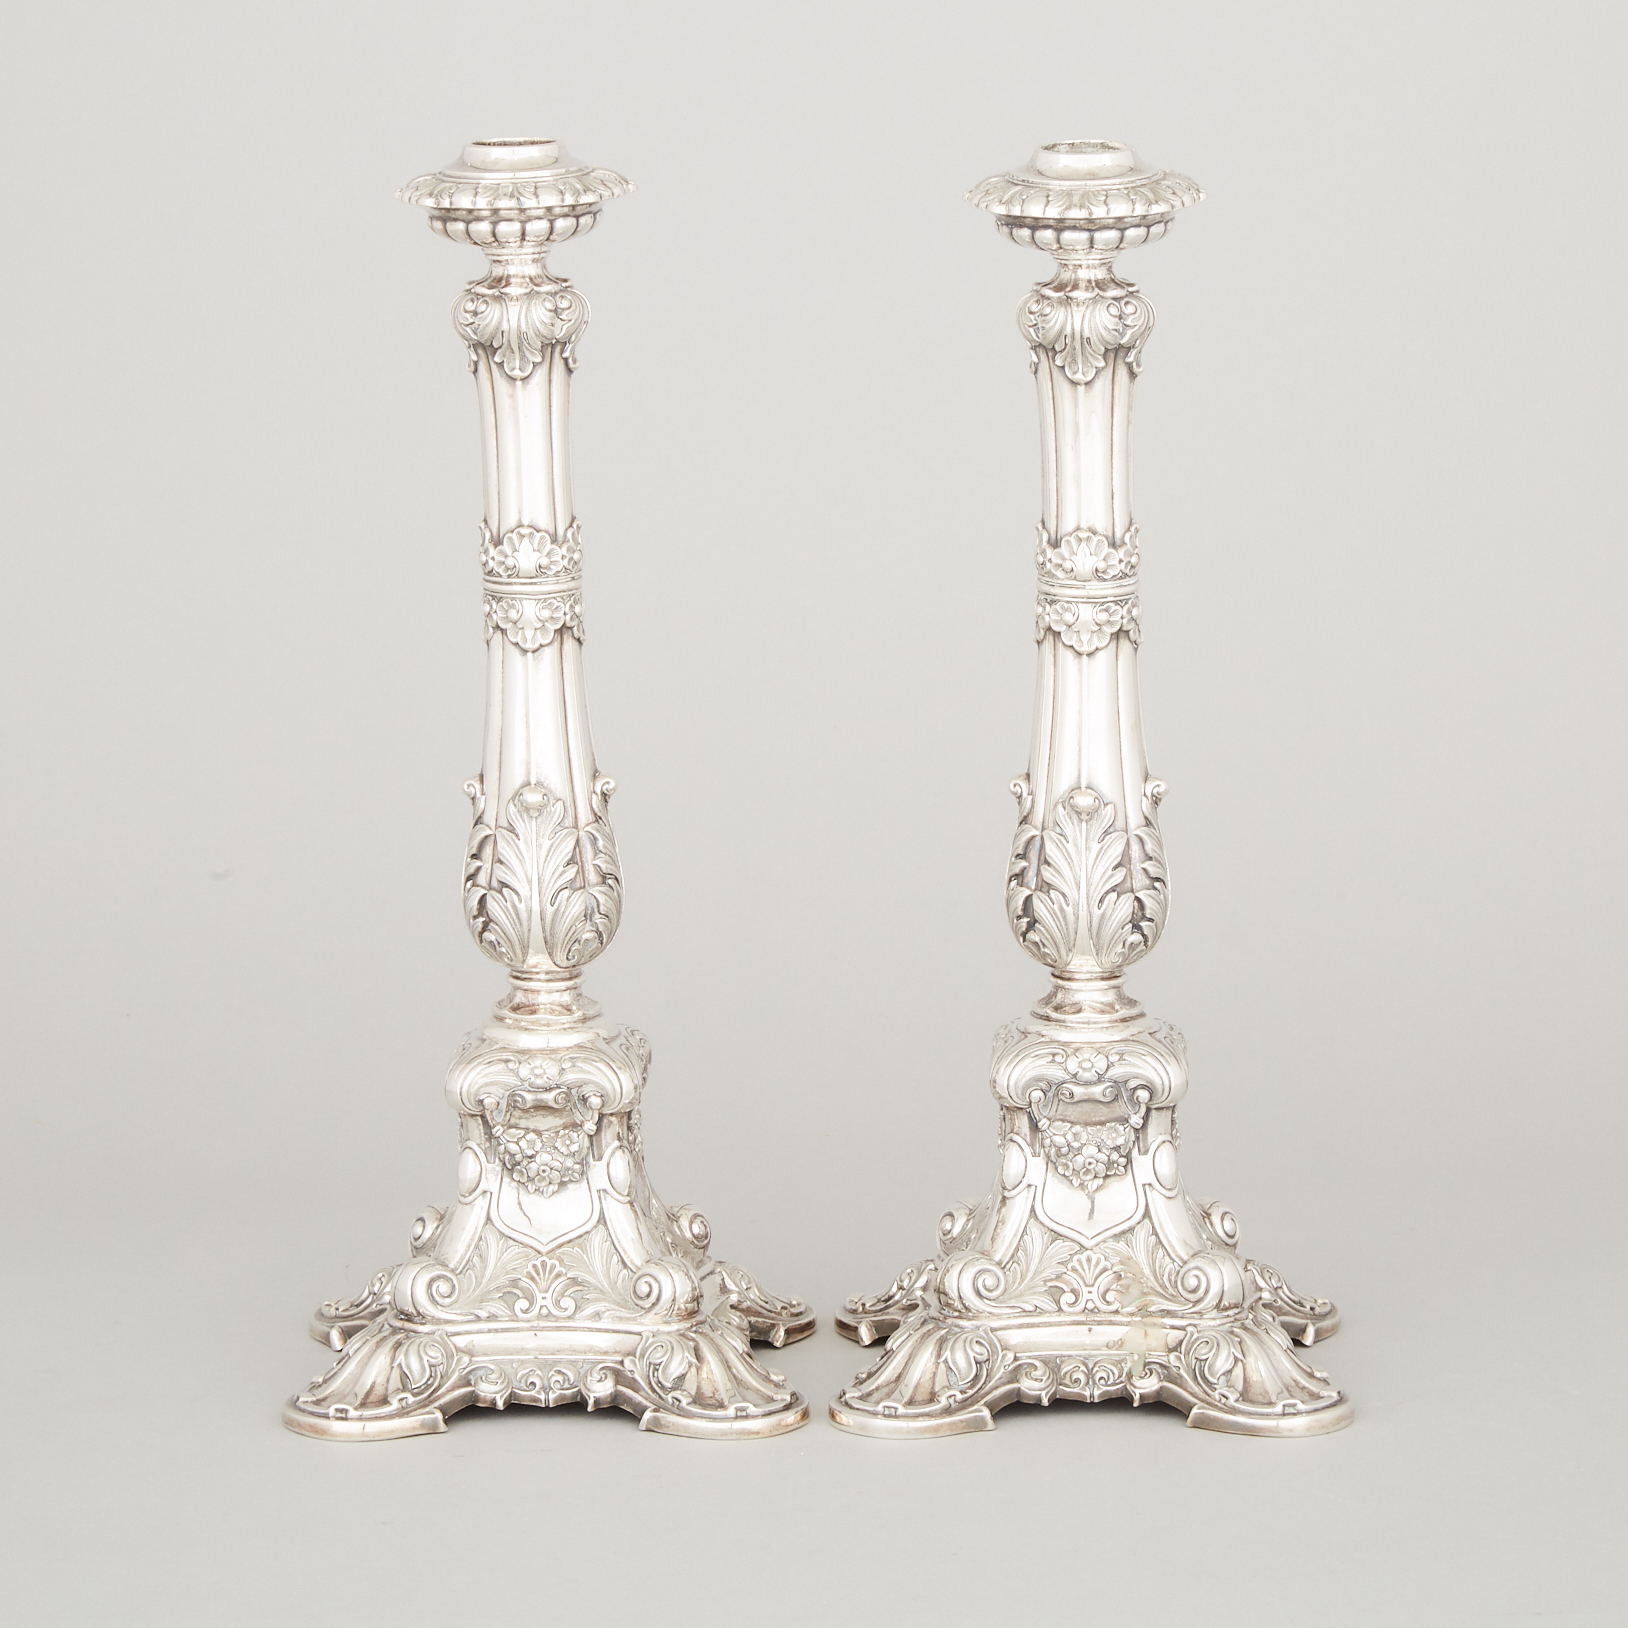 Pair of German Silver Table Candlesticks, Sackermann, Hessenberg & Co., Frankfurt, mid-19th century